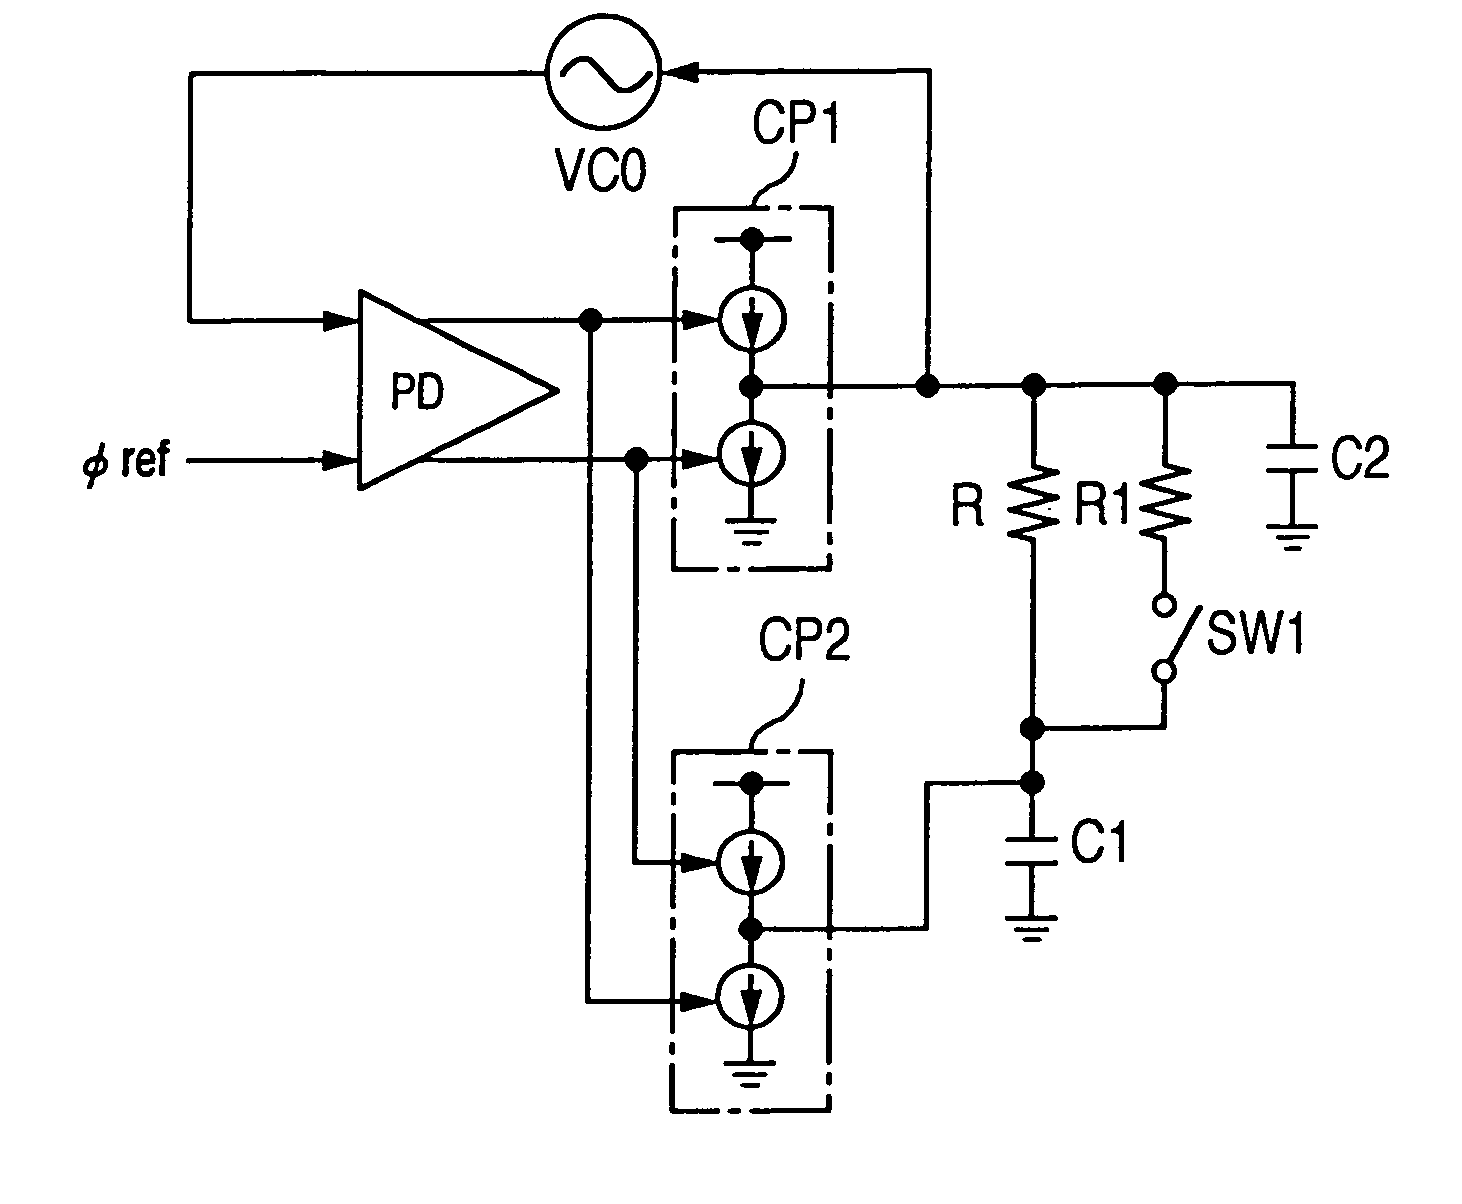 Semiconductor integrated circuit having built-in PLL circuit